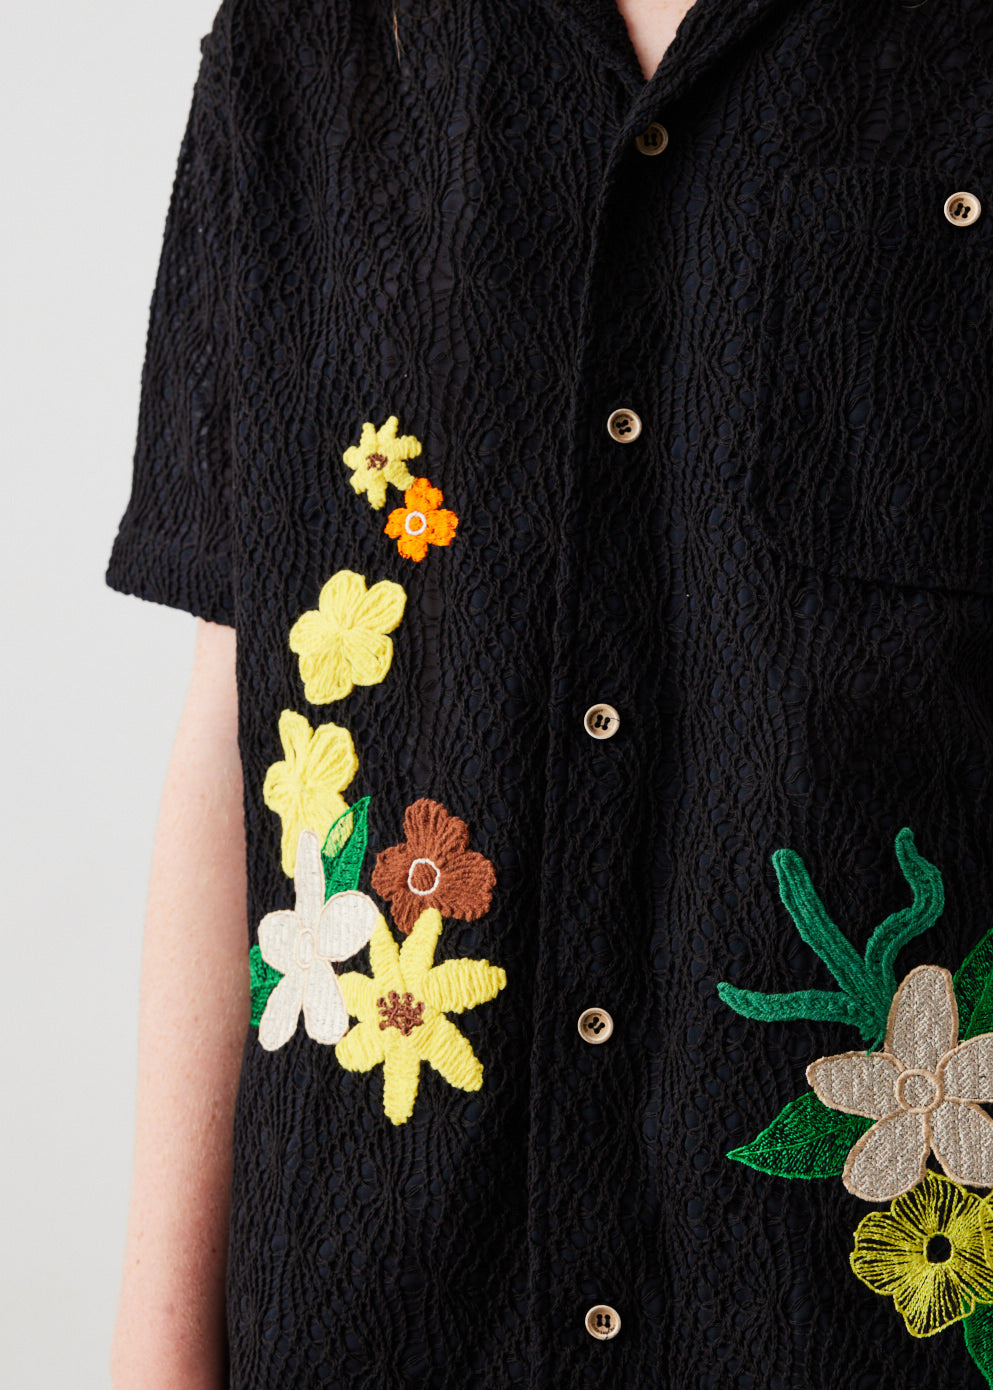 Flower Embroidered Open Collar Shirt